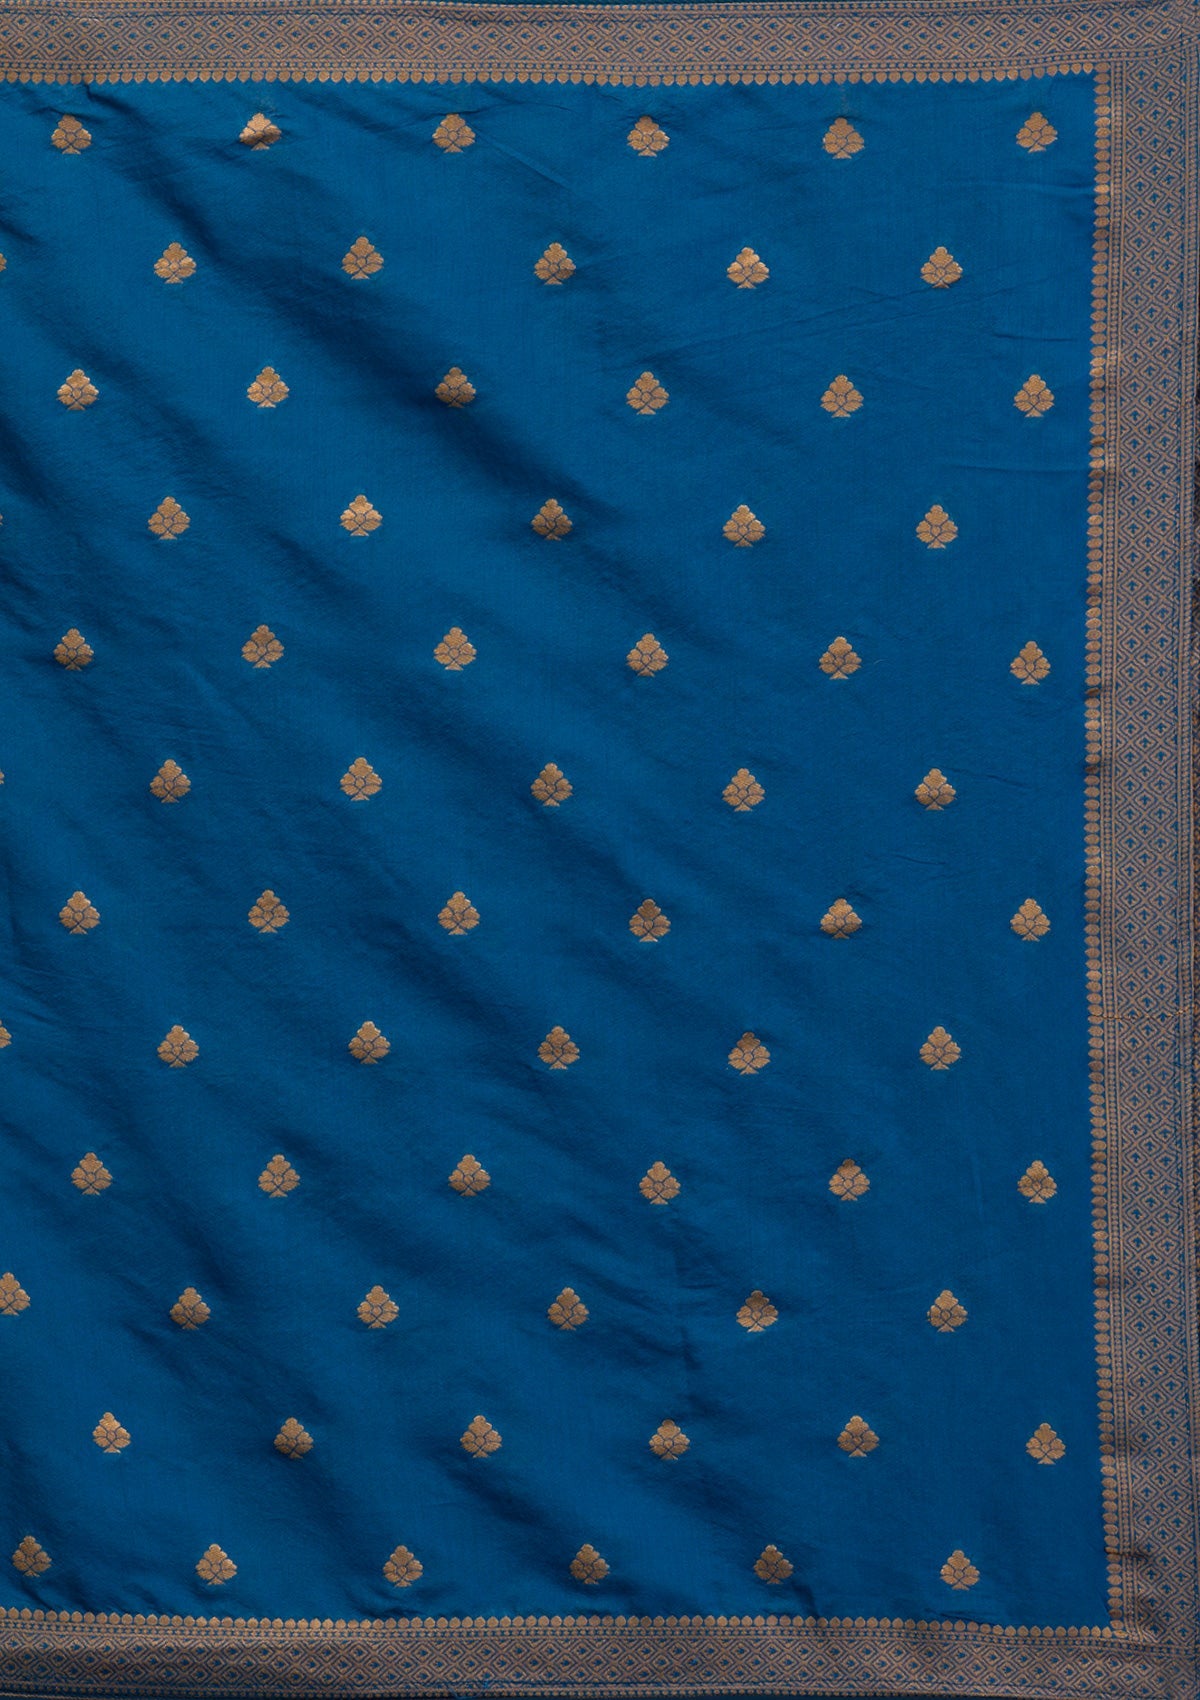 Peacock Blue Threadwork Art Silk Readymade Salwar Suit-Koskii